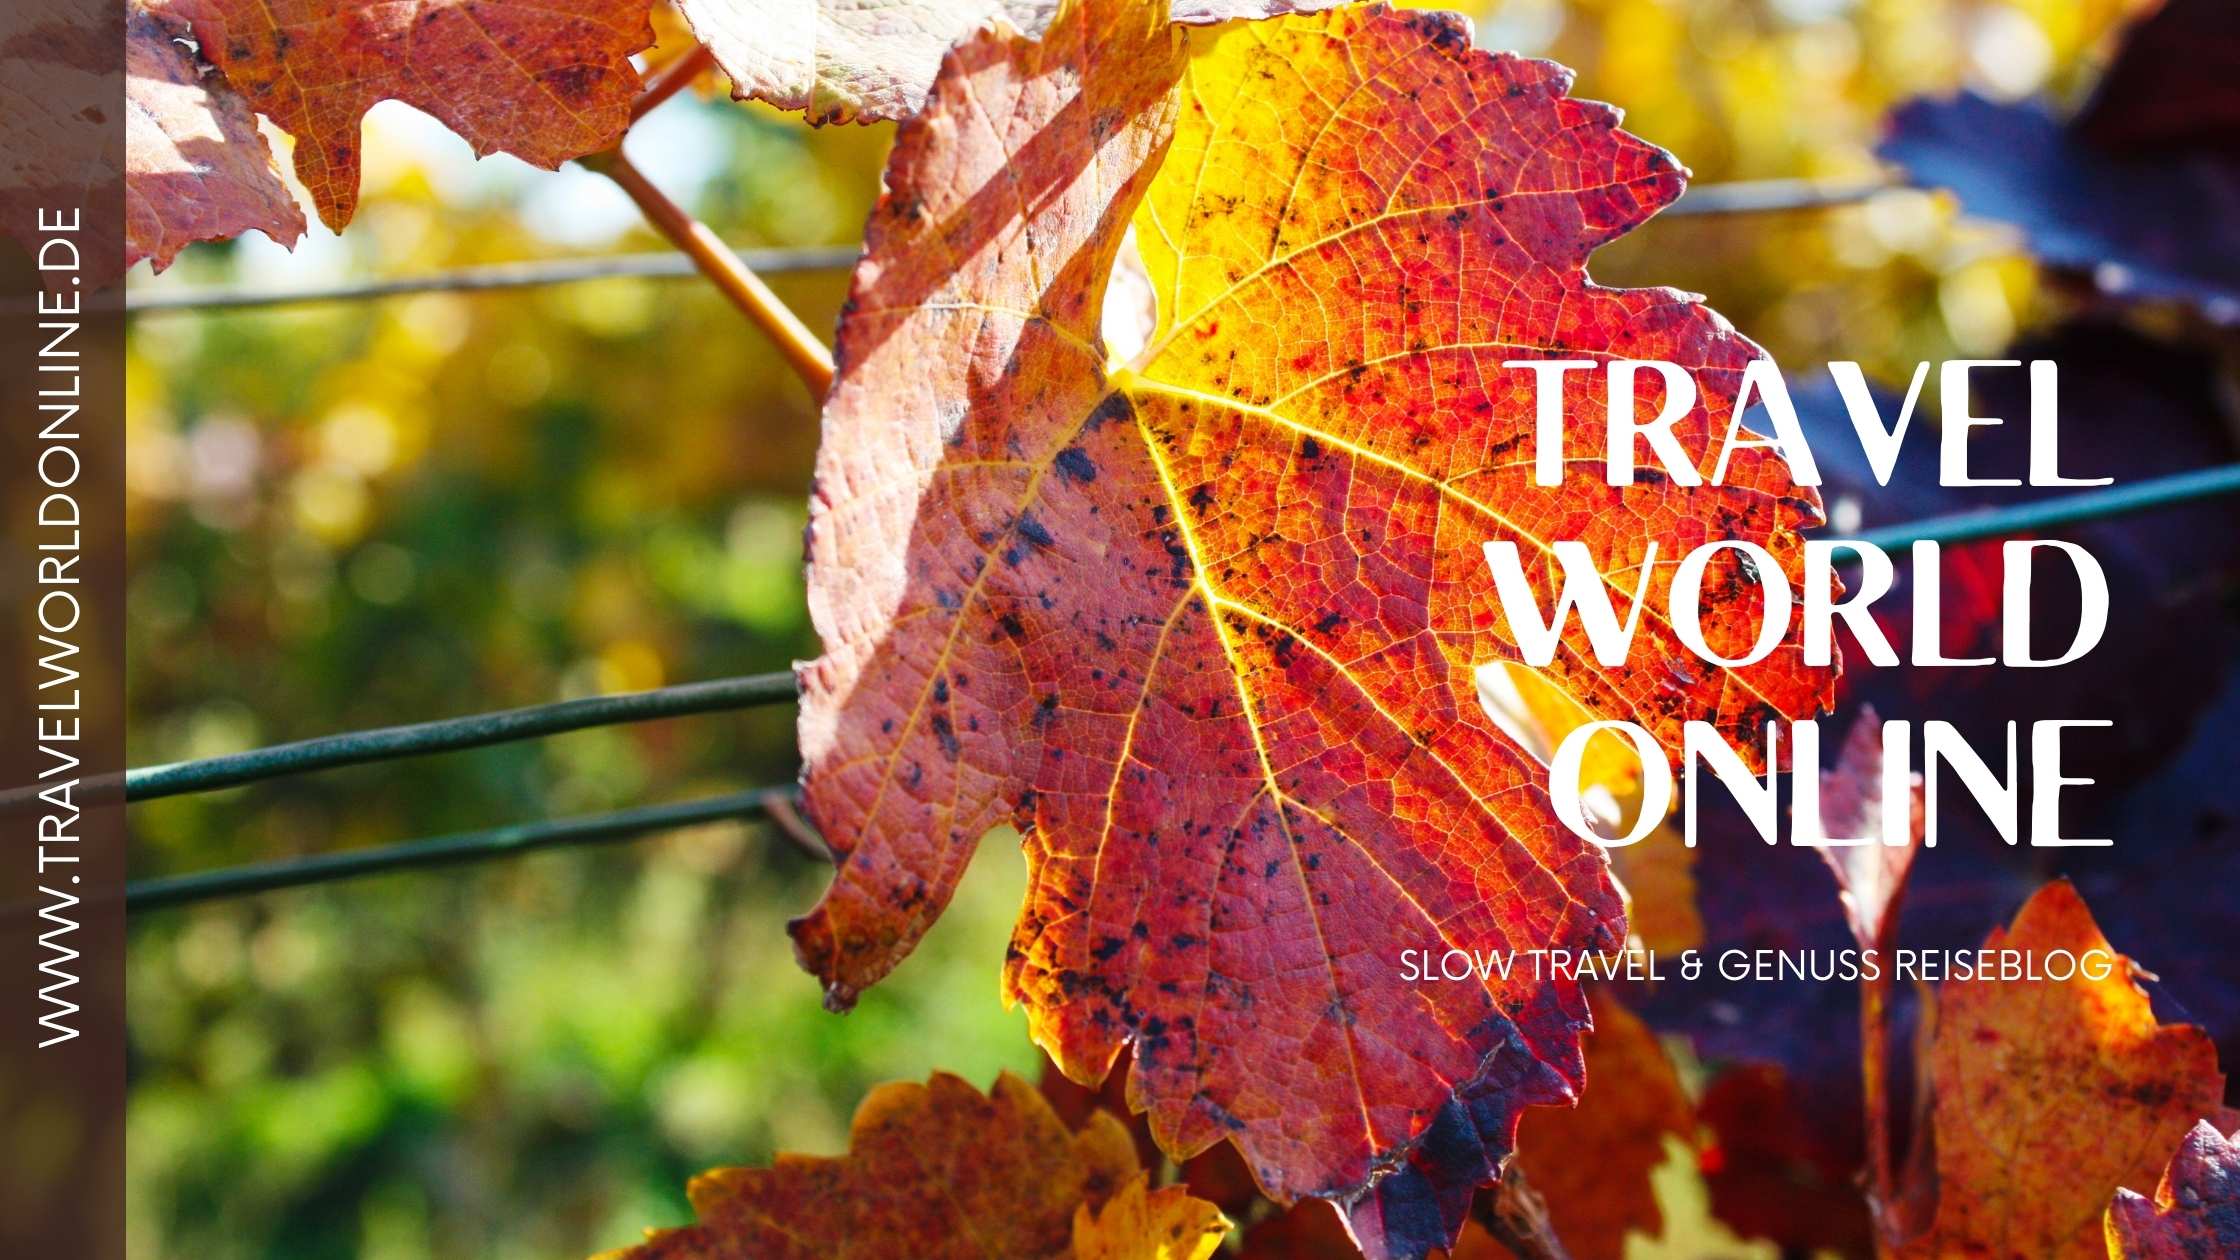 TravelWorldOnline - Slow Travel & Genuss Reiseblog